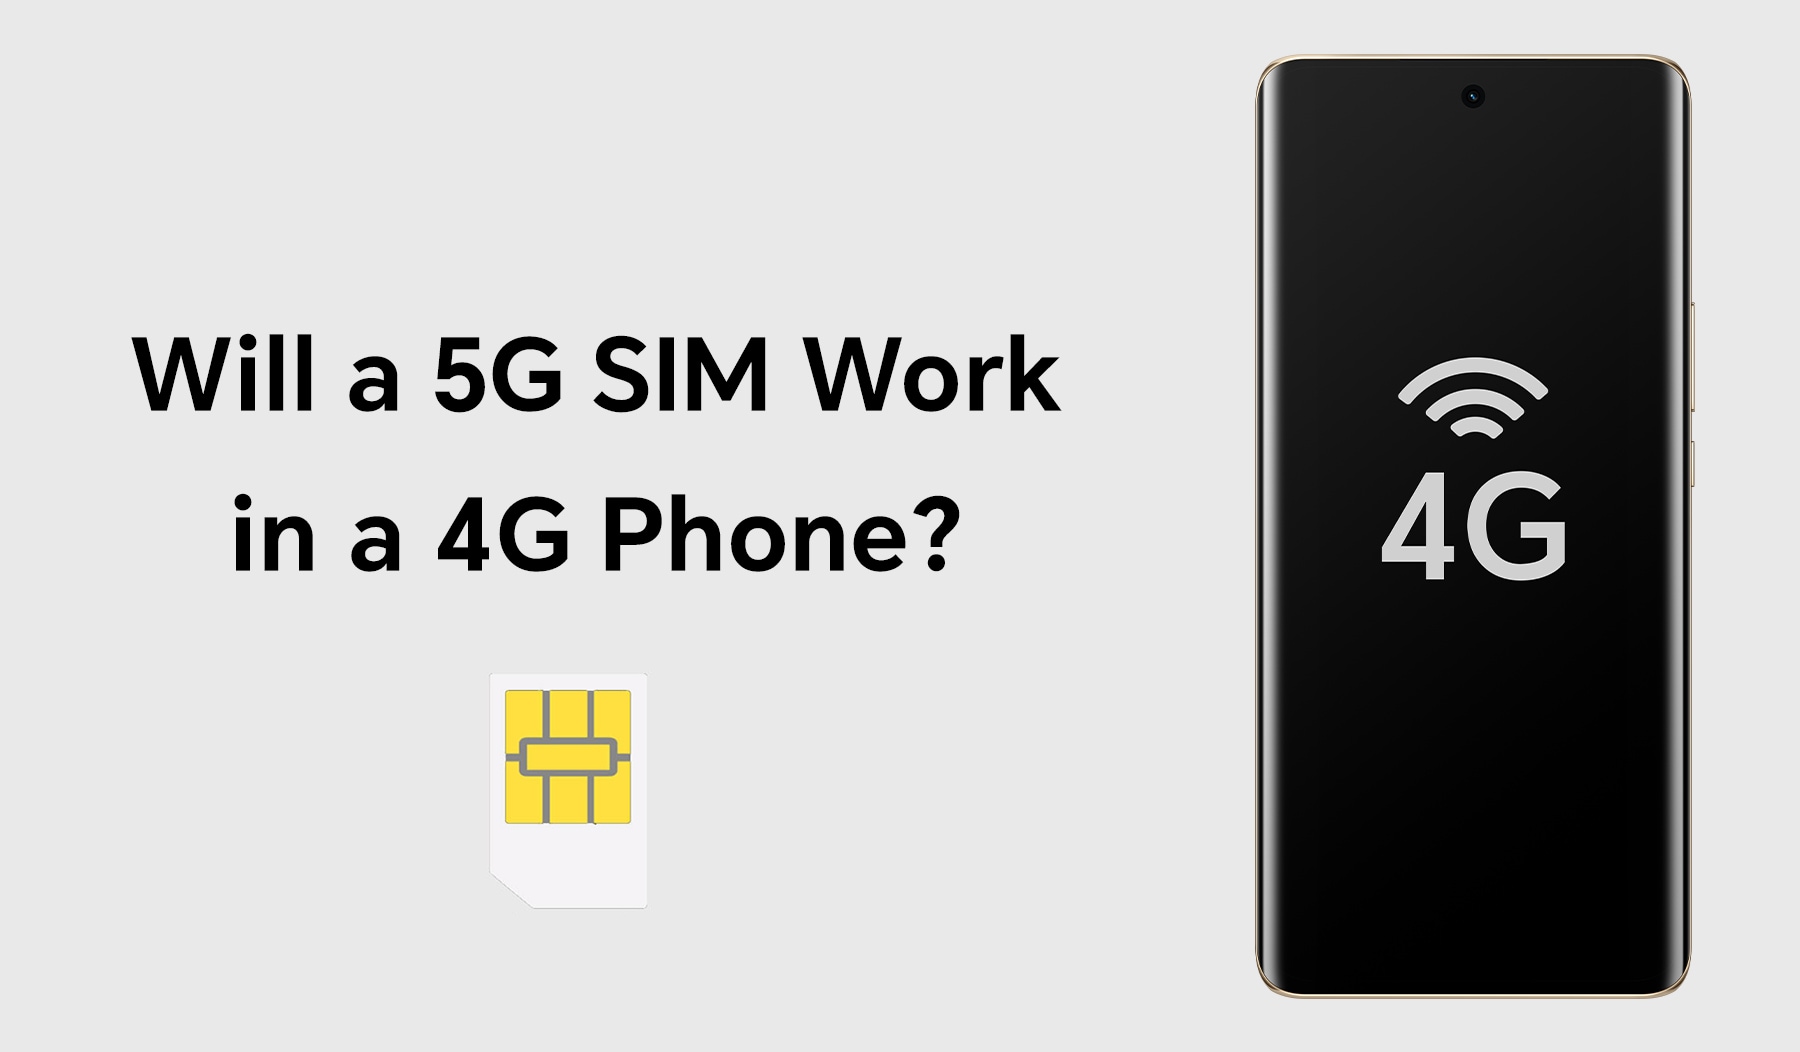 Will a 5G SIM Work in a 4G Phone